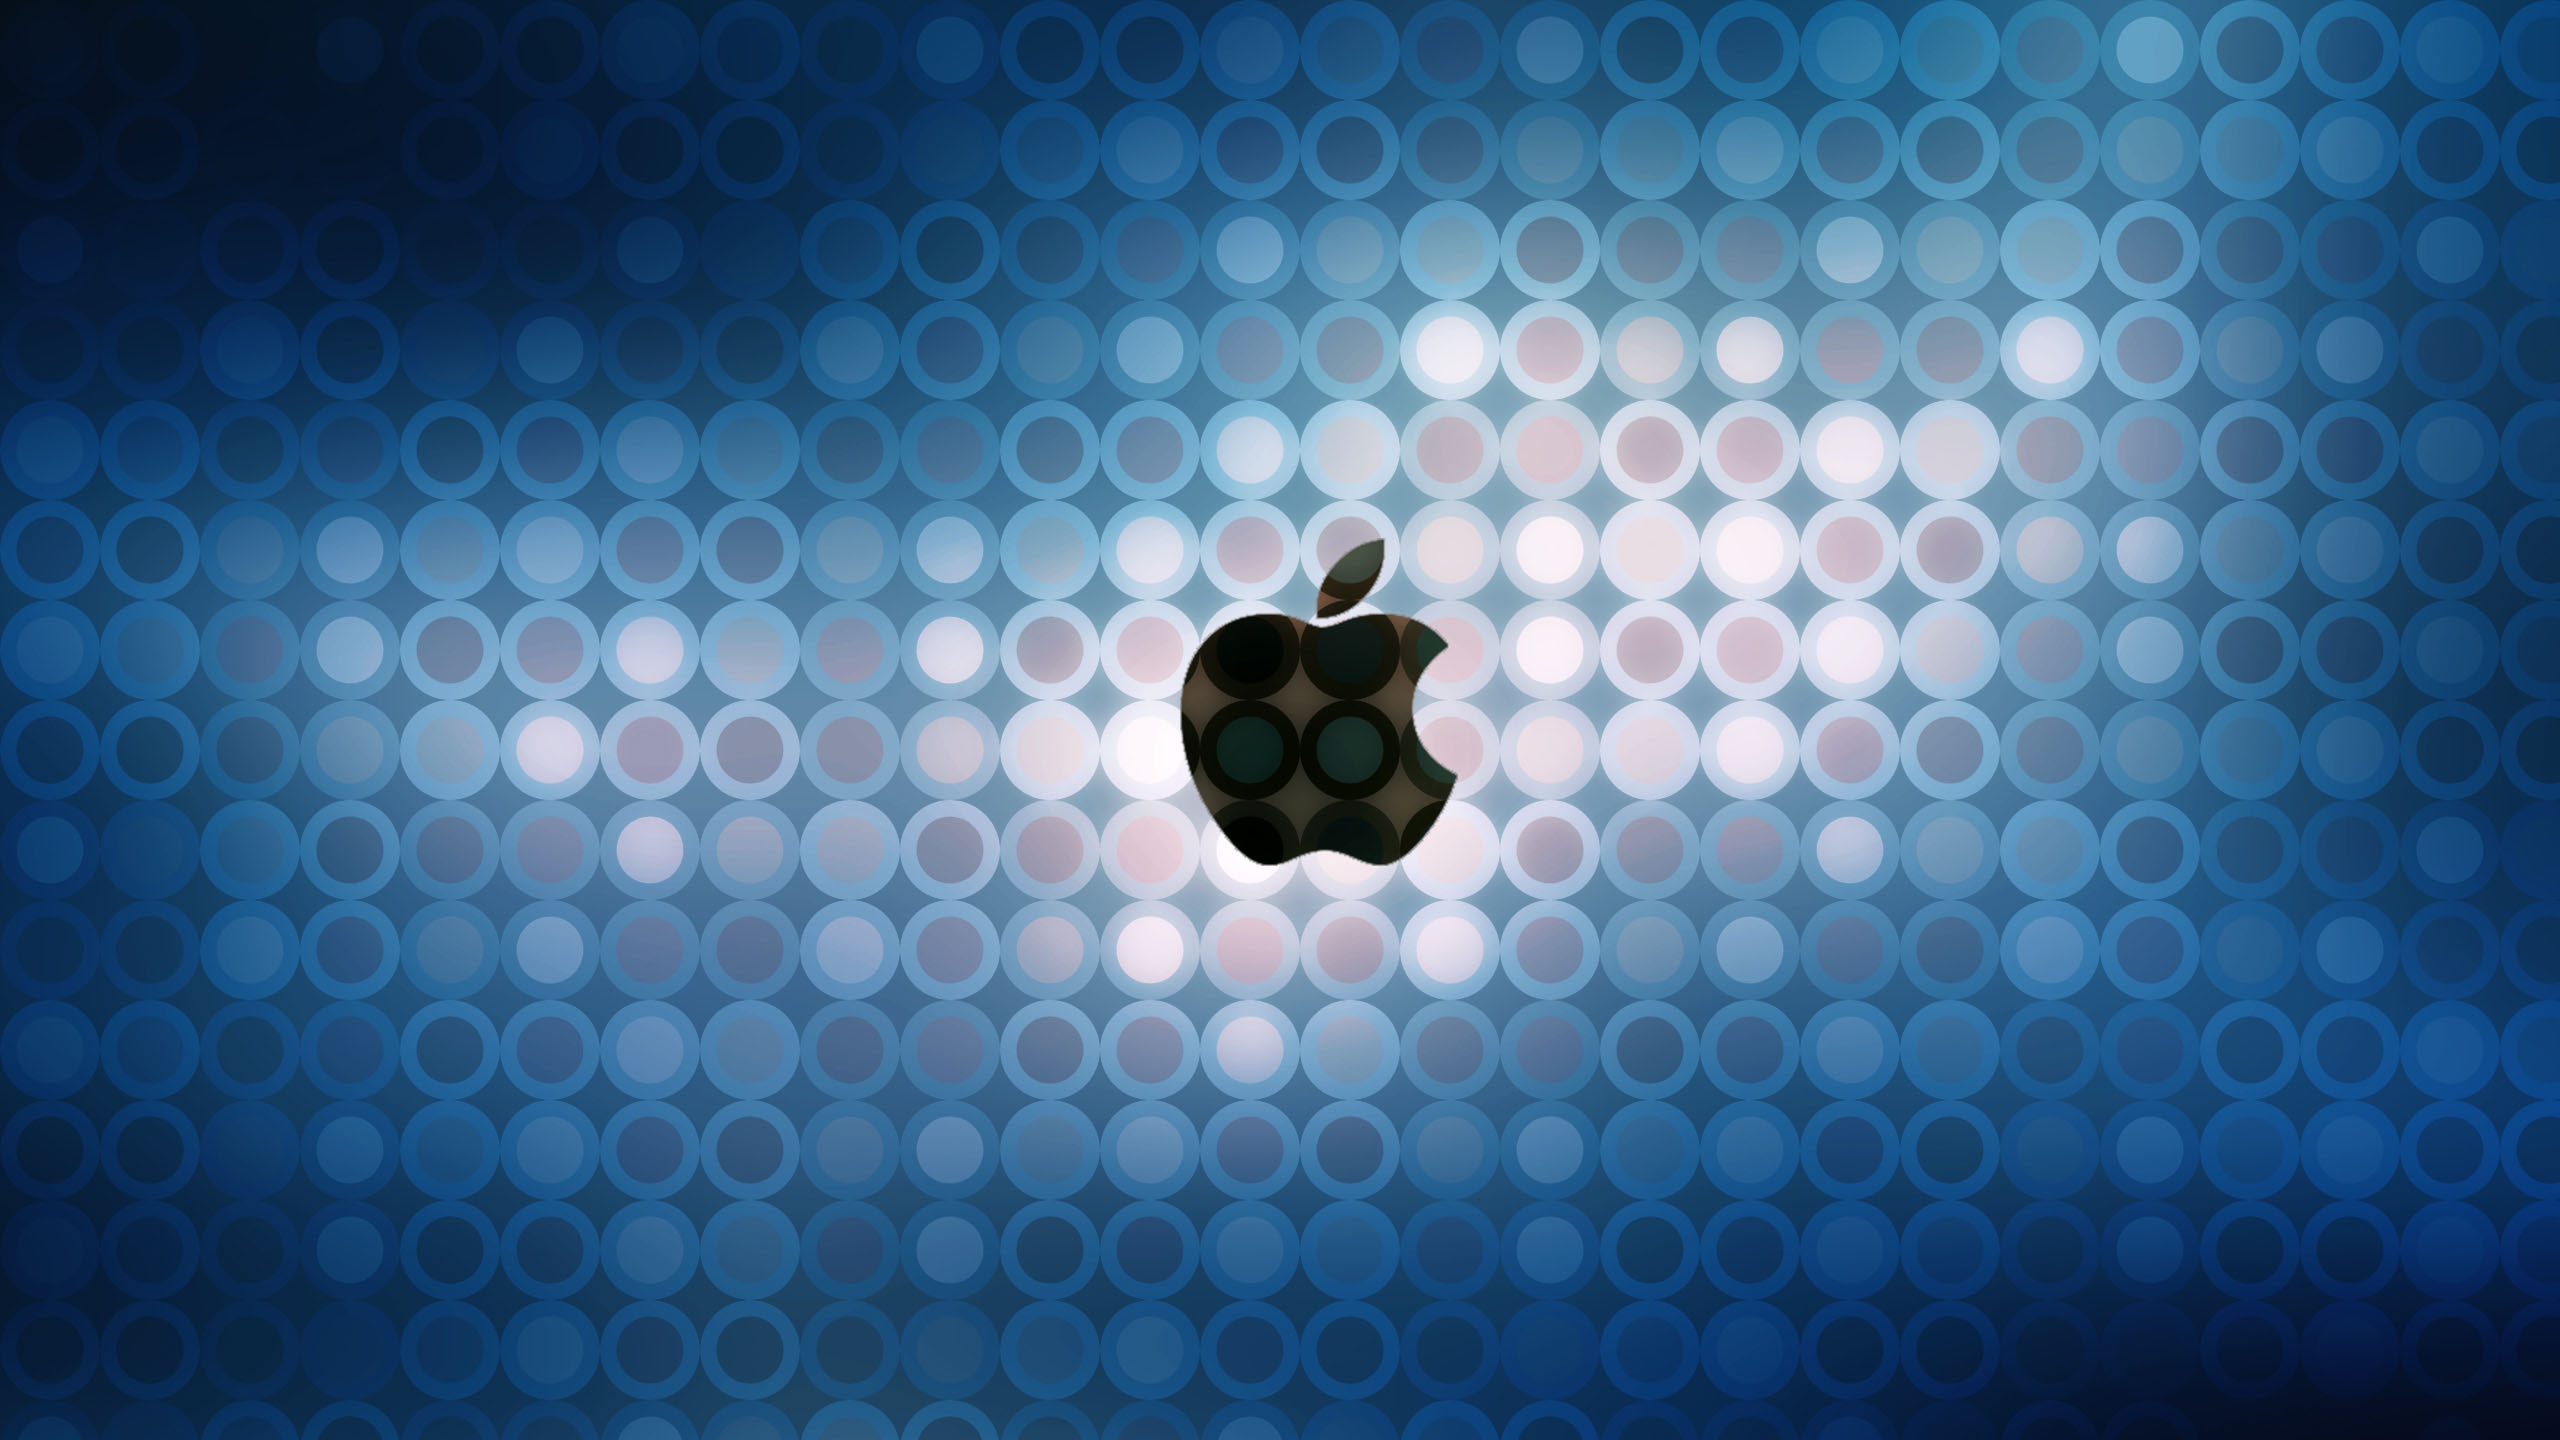 Apple Mac HD Wallpaper